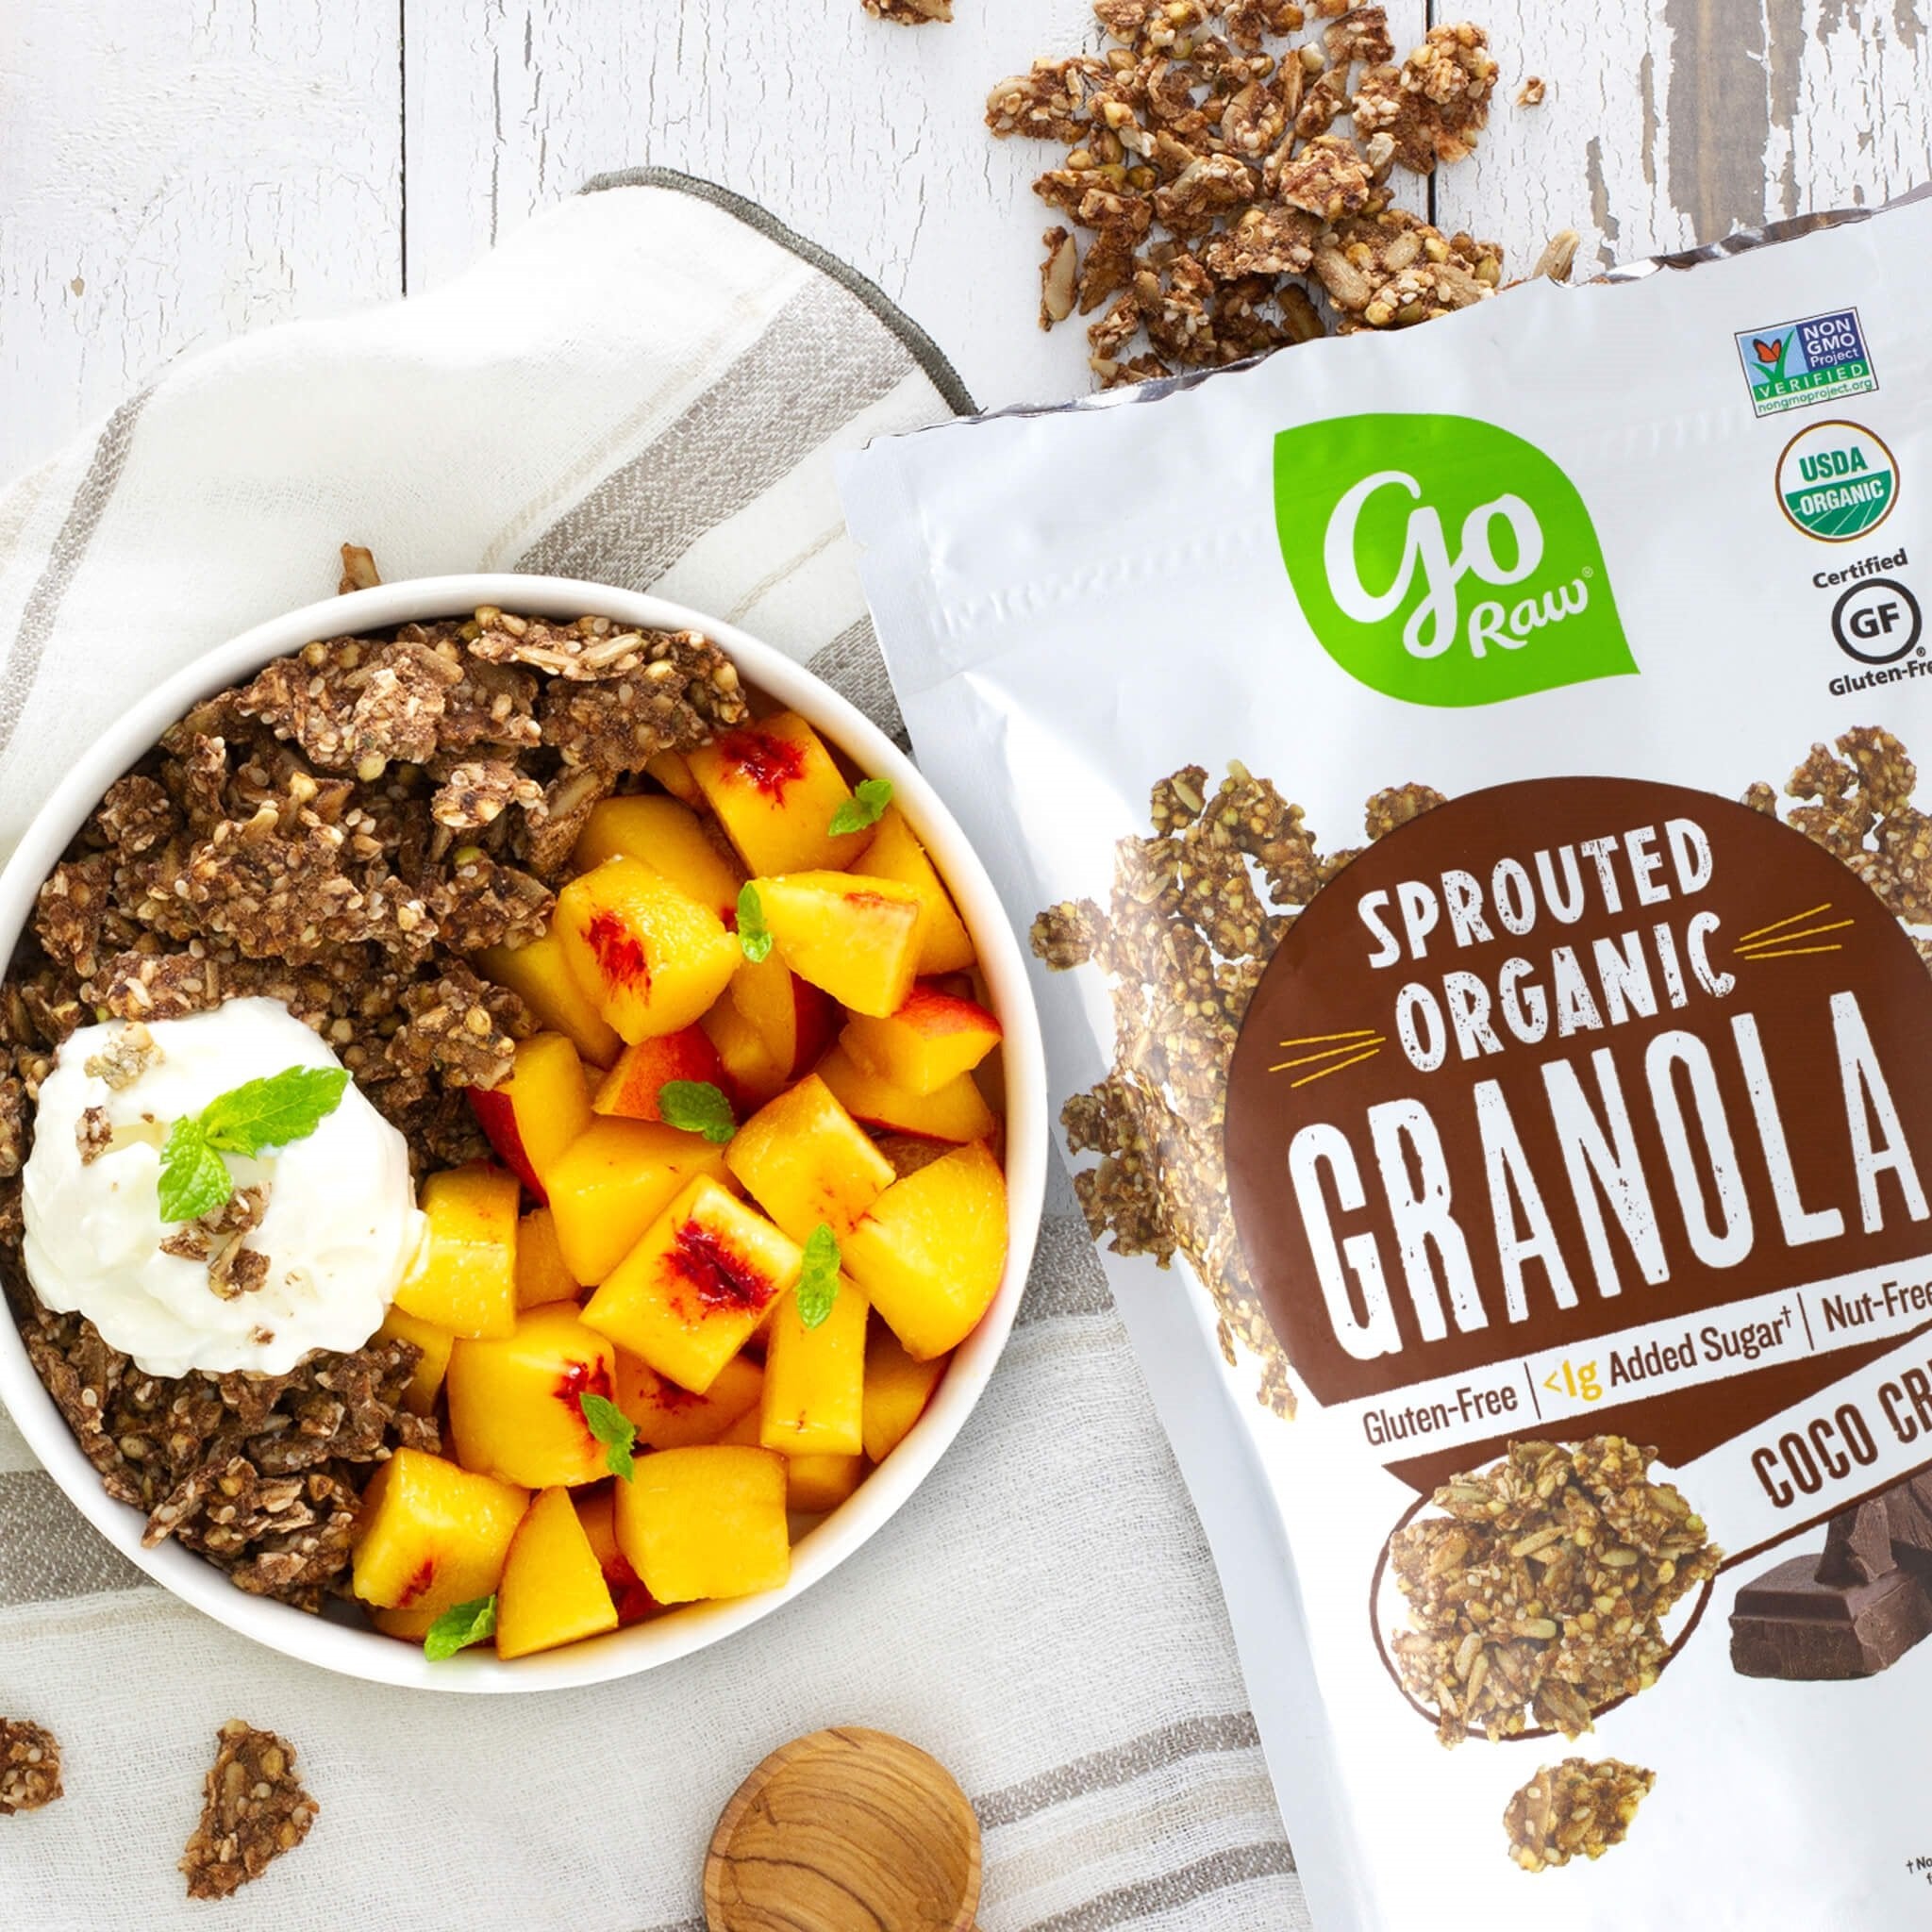 Go Raw Organic Gluten-Free Coco Crunch Sprouted Granola